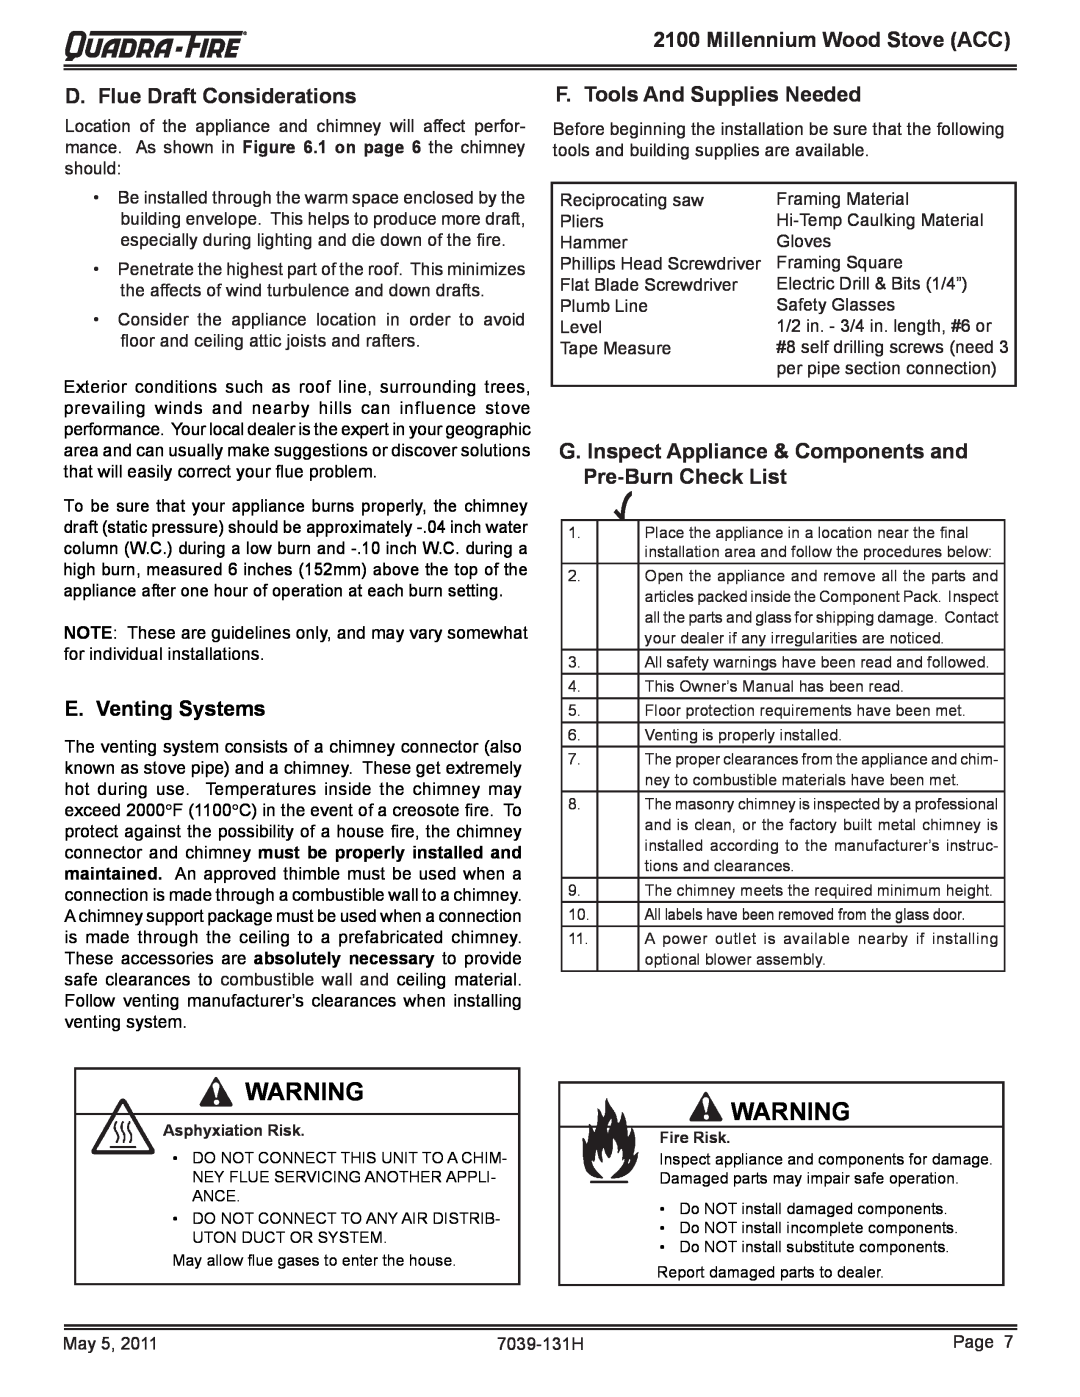 Quadra-Fire 21M-ACC Millennium Wood Stove ACC, D. Flue Draft Considerations, E. Venting Systems, Pre-BurnCheck List 